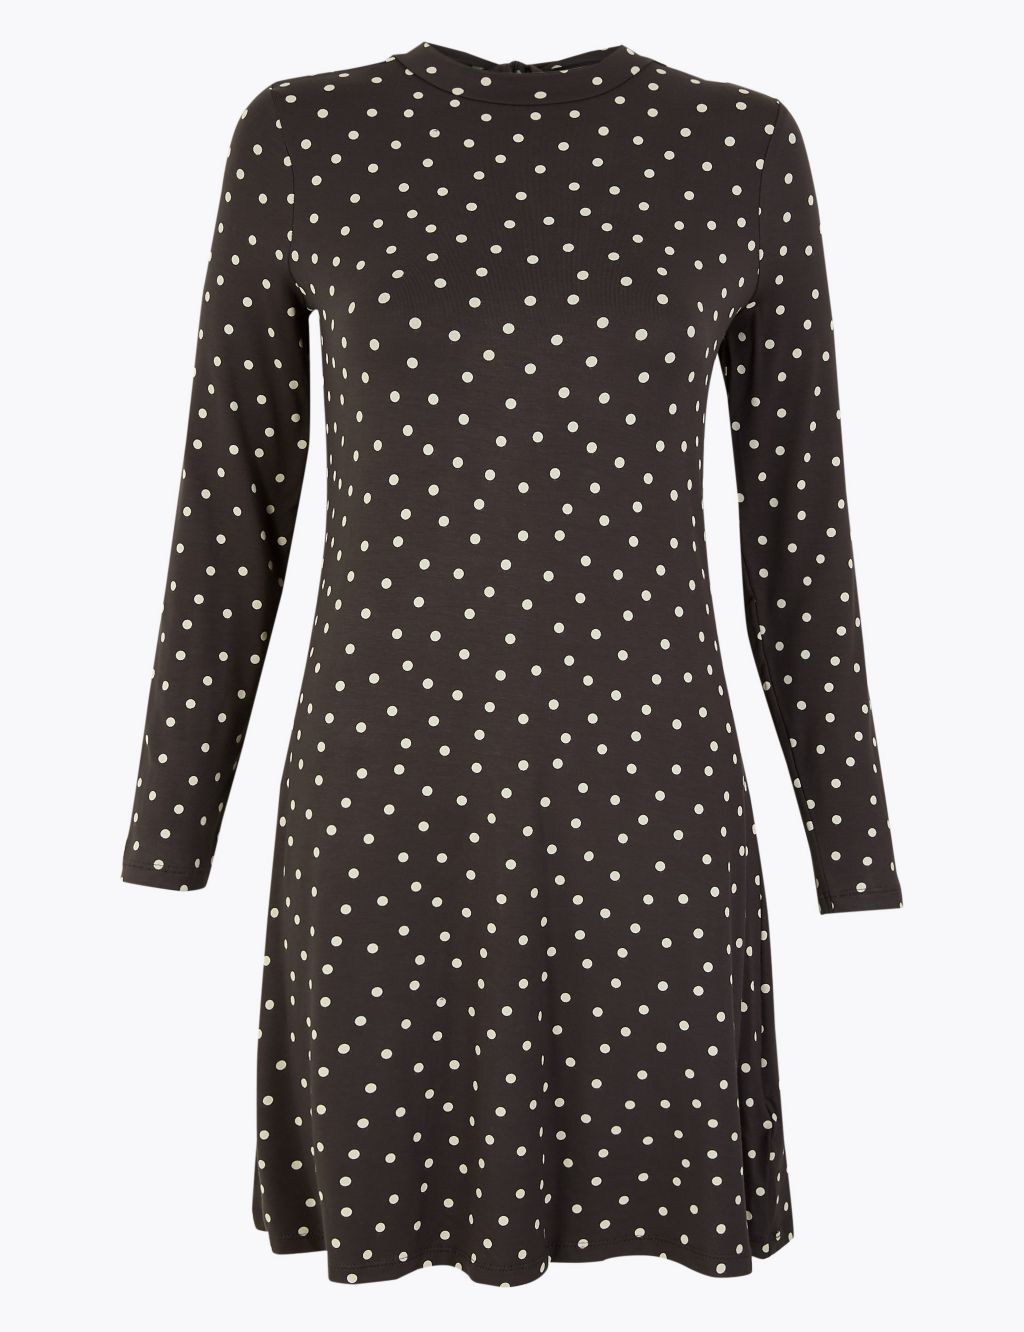 PETITE Jersey Polka Dot Swing Dress | M&S Collection | M&S